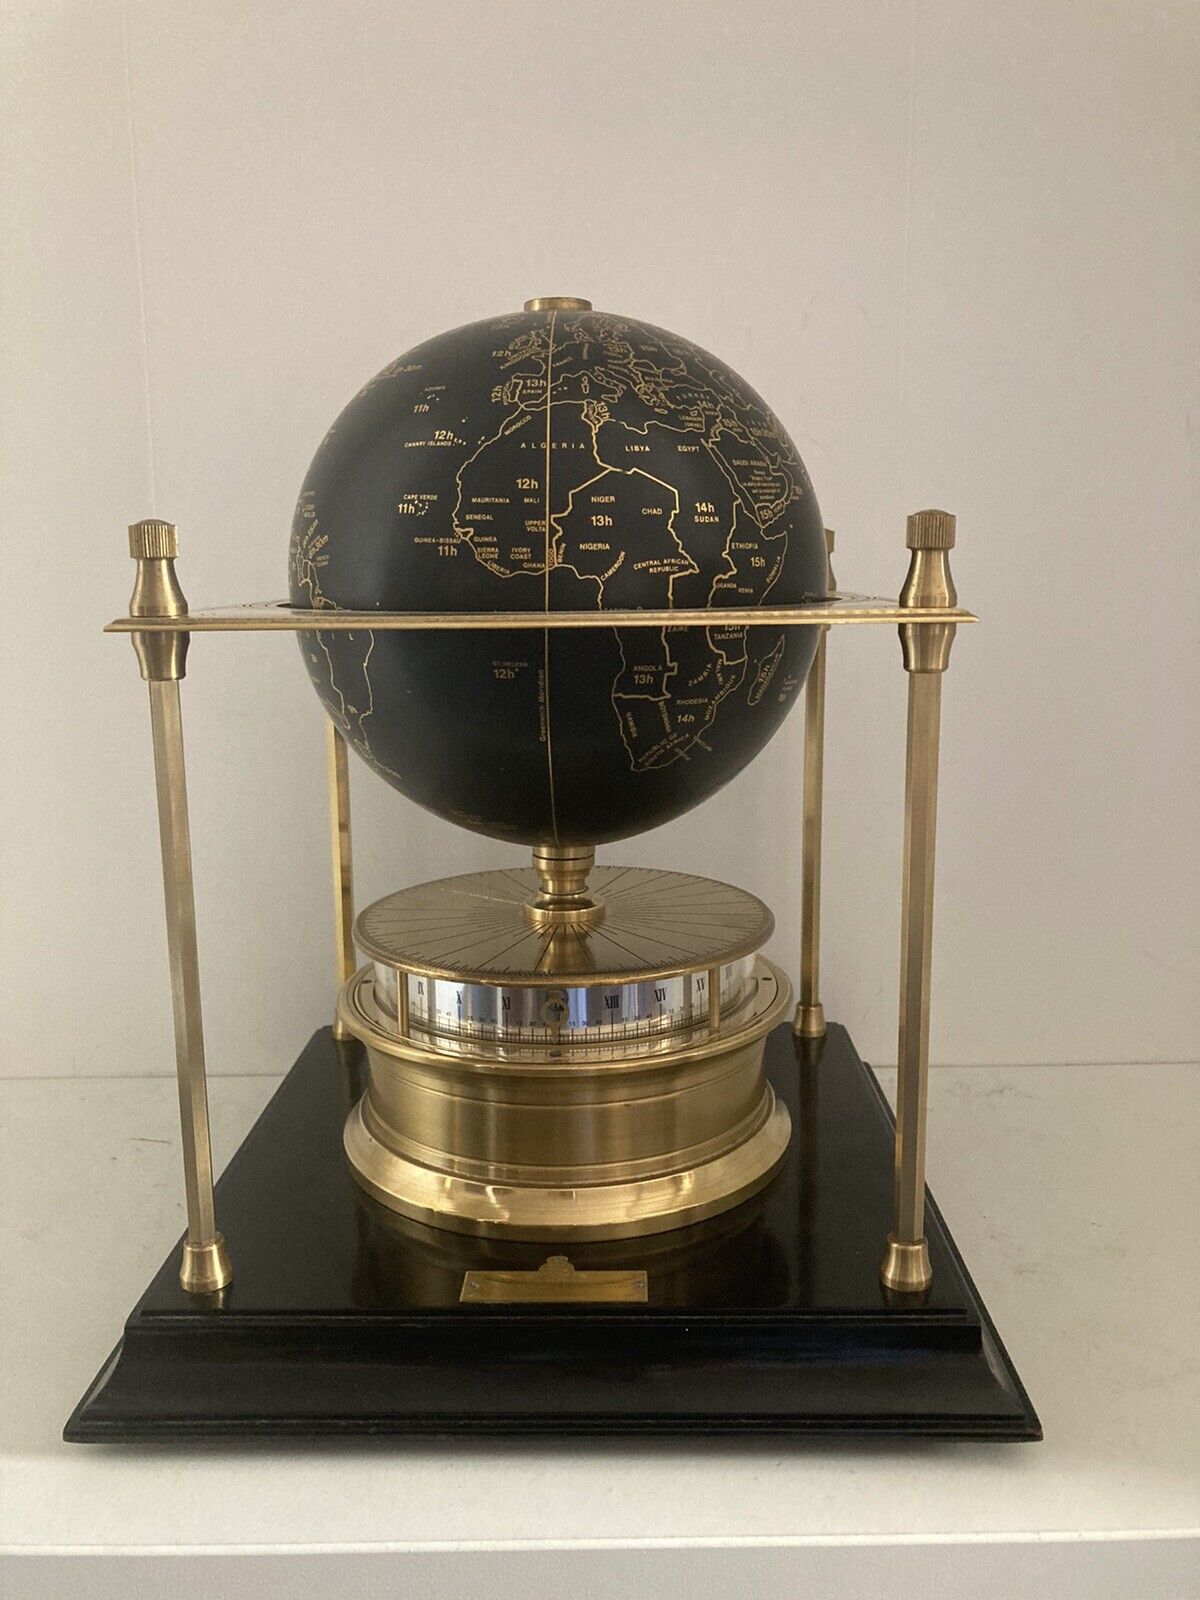 Vintage Royal Society World Globe Clock By Franklin Mint Collection